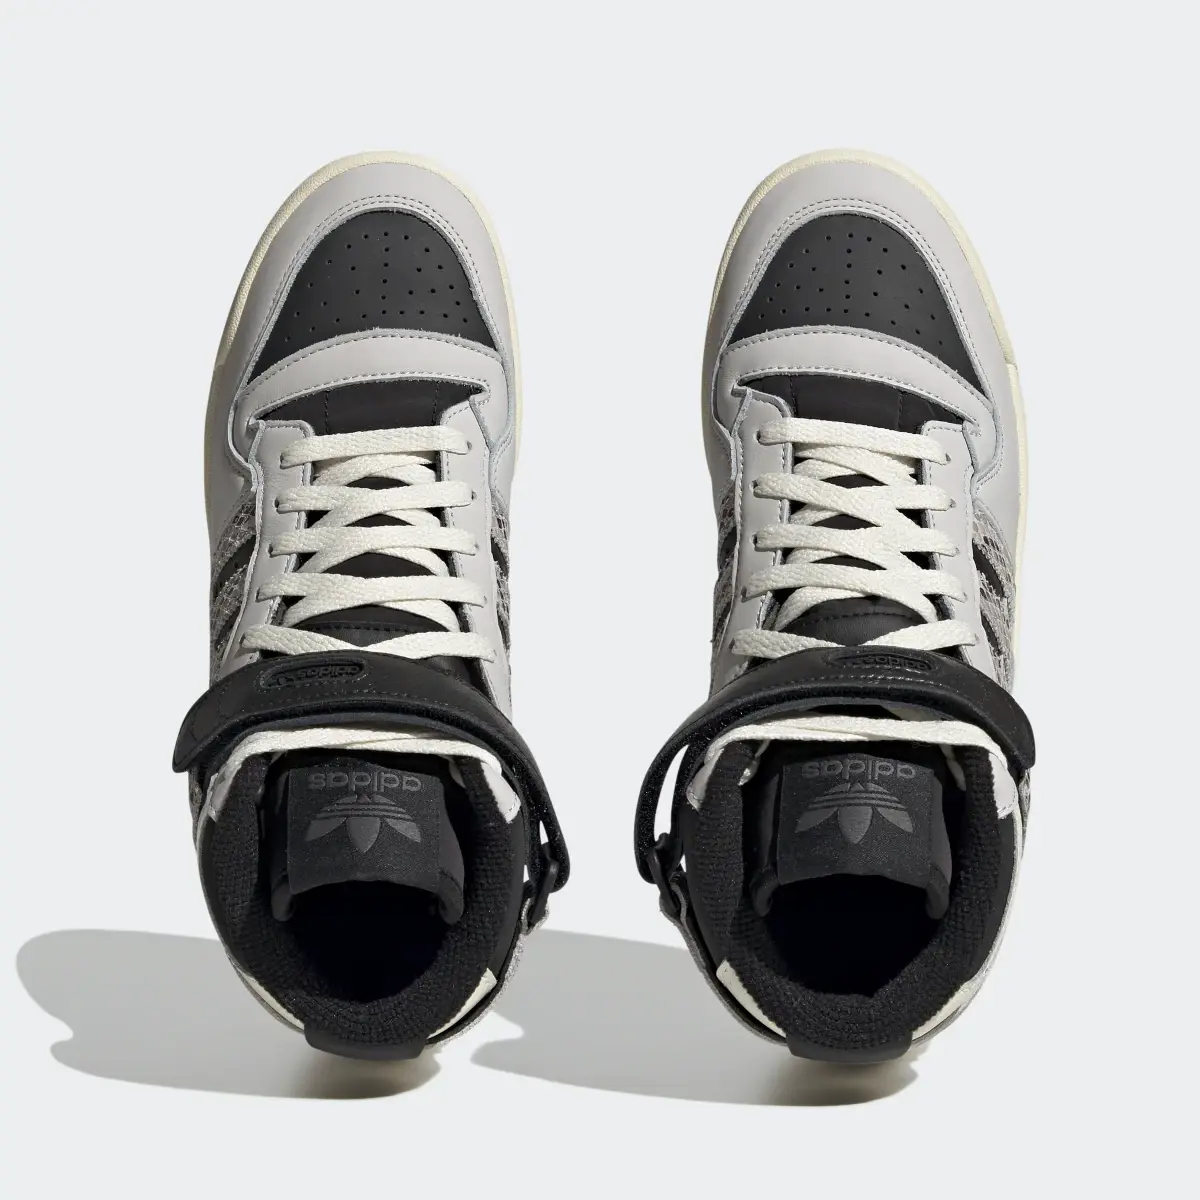 Adidas Forum 84 Hi Shoes. 3